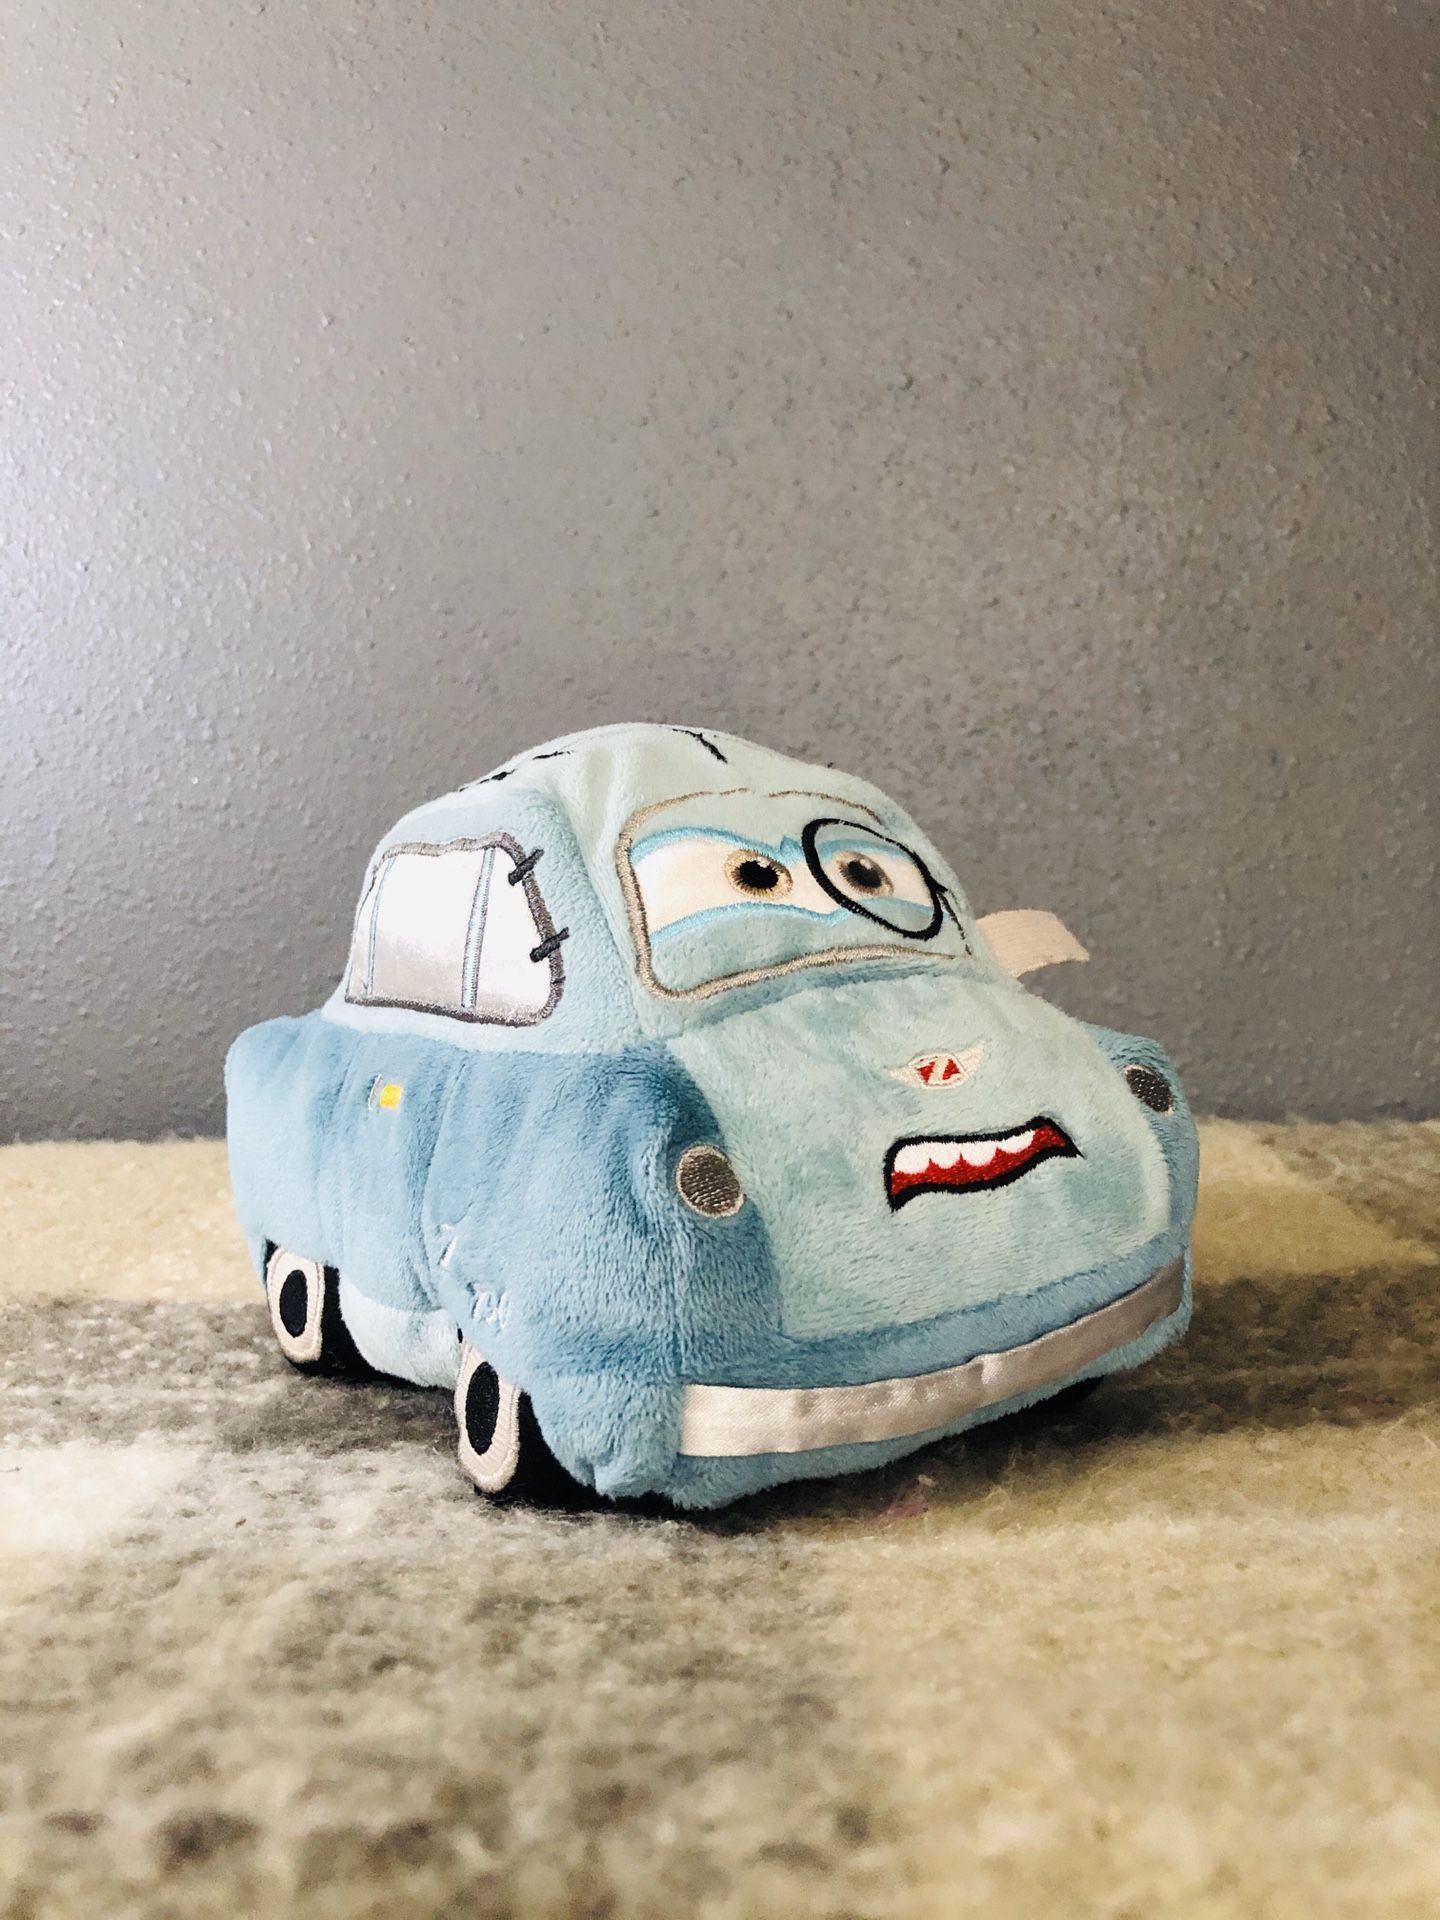 Disney cars movie plush blue stuffed animal